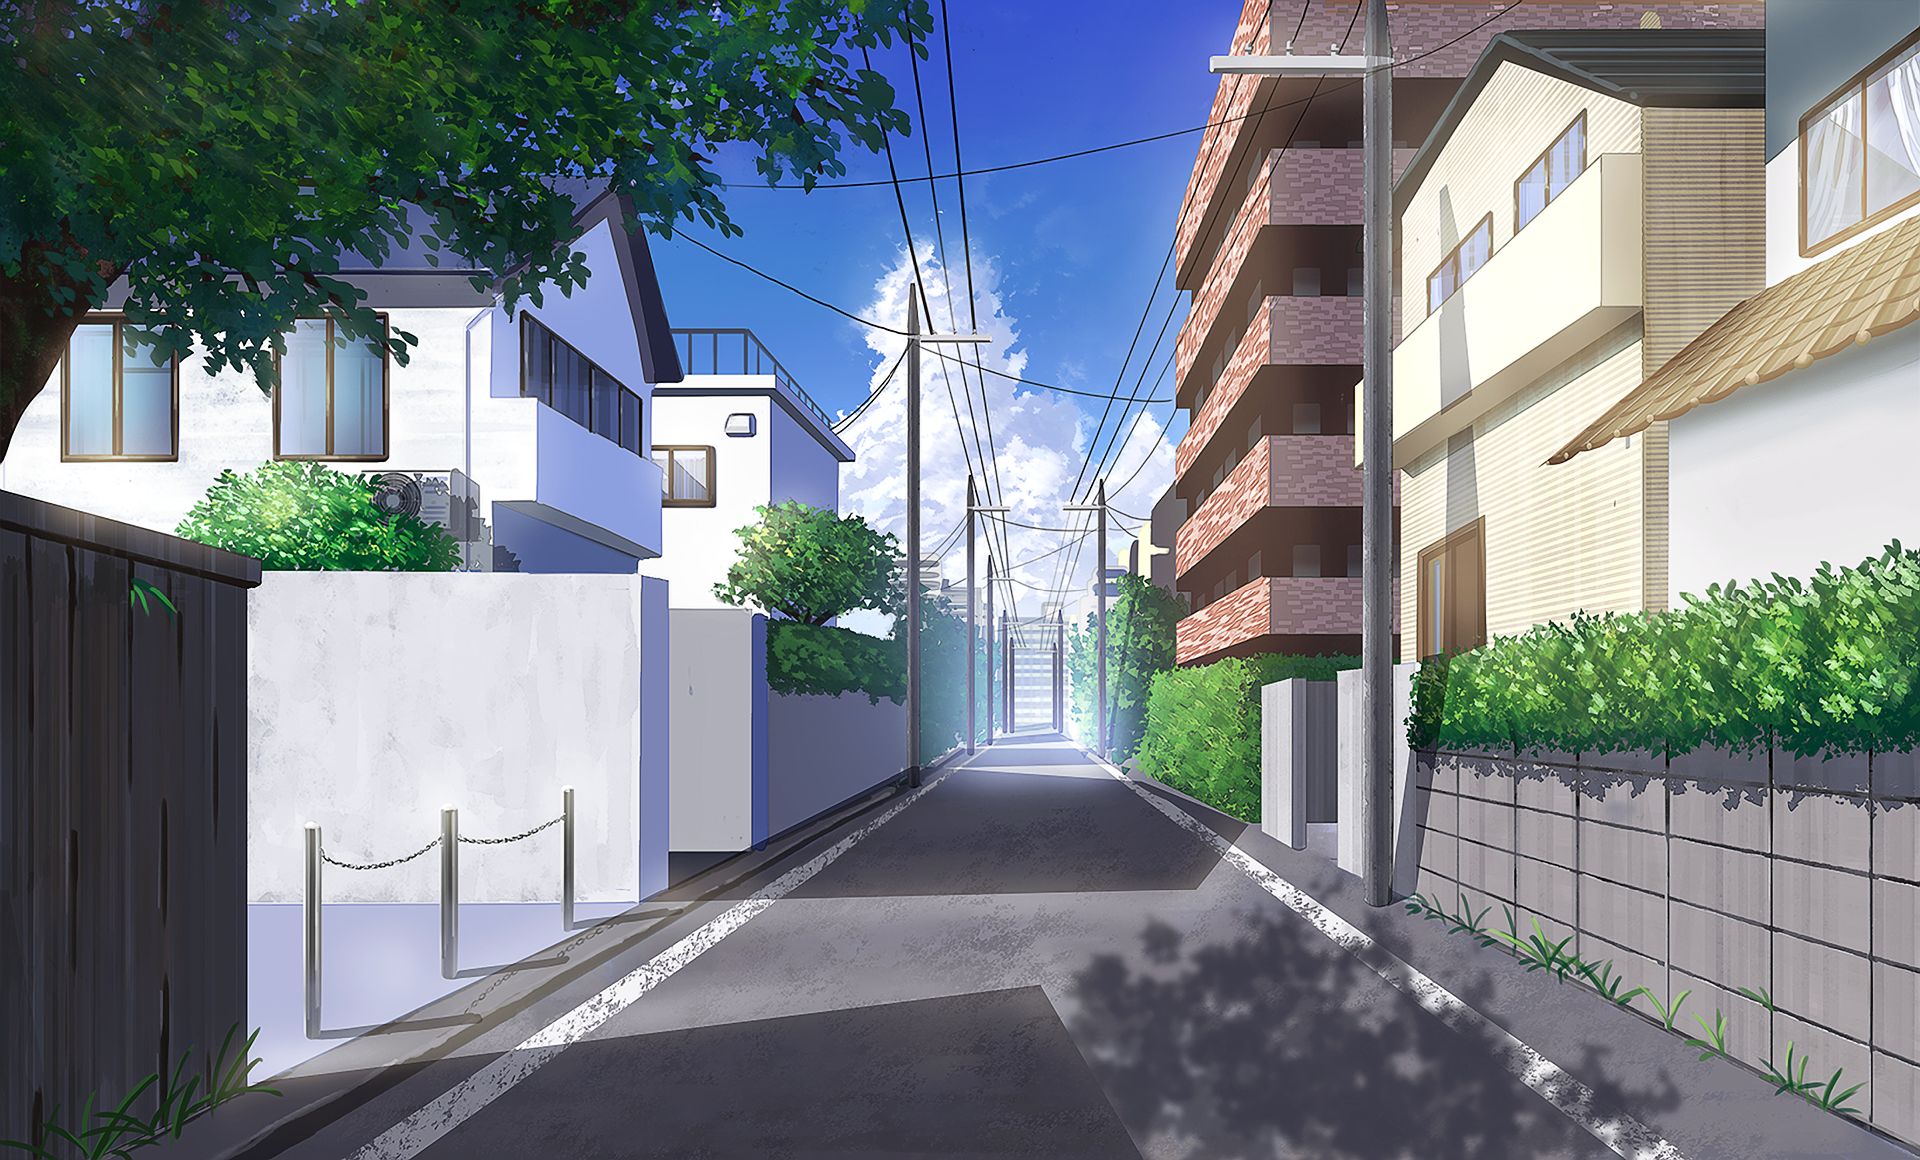 Anime Landscape: Outdoor Anime Landscape | Scenery background, Landscape,  Anime house